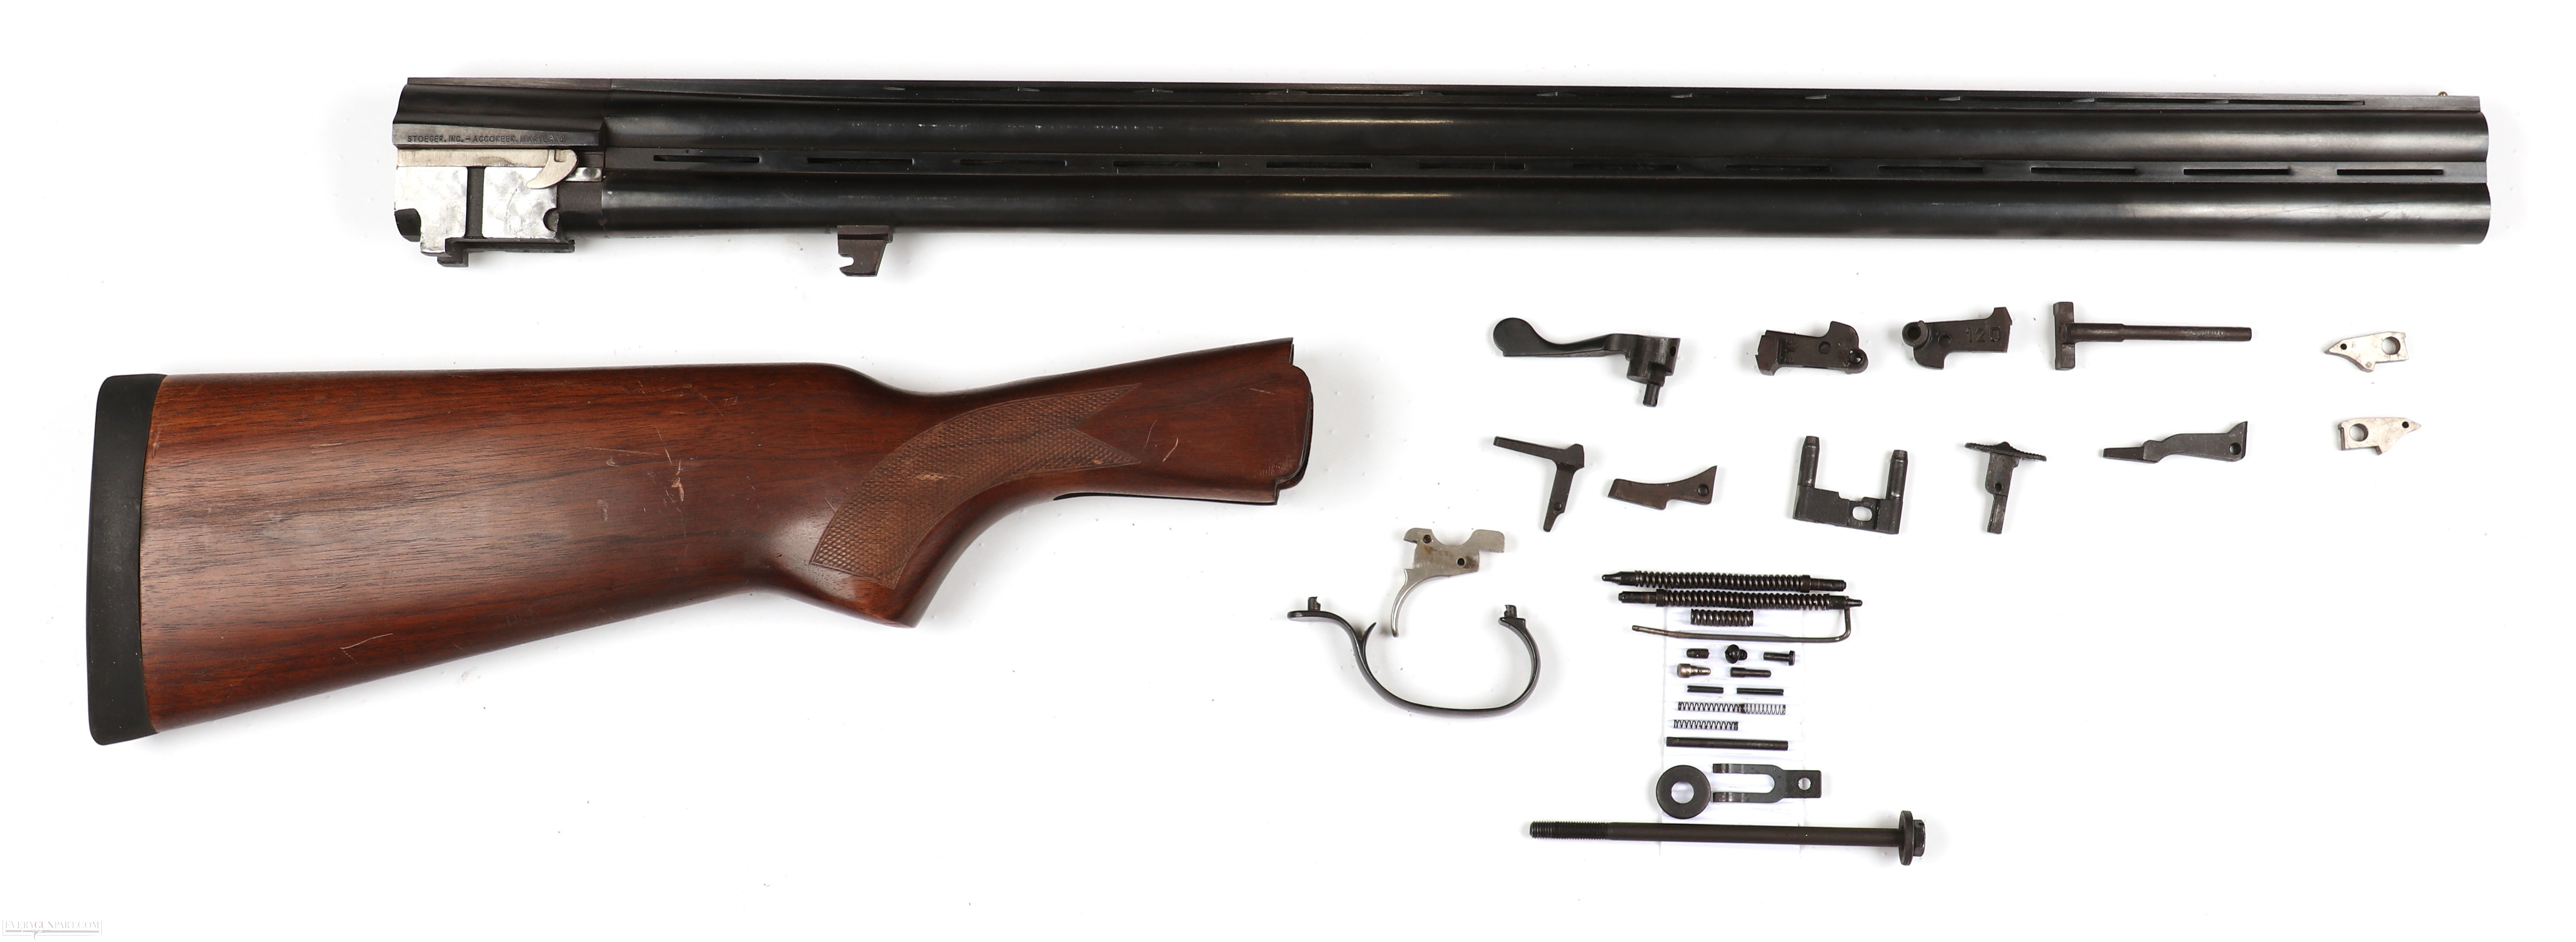 Stoeger Condor Overunder Shotgun Parts Kit | Order parts and parts 